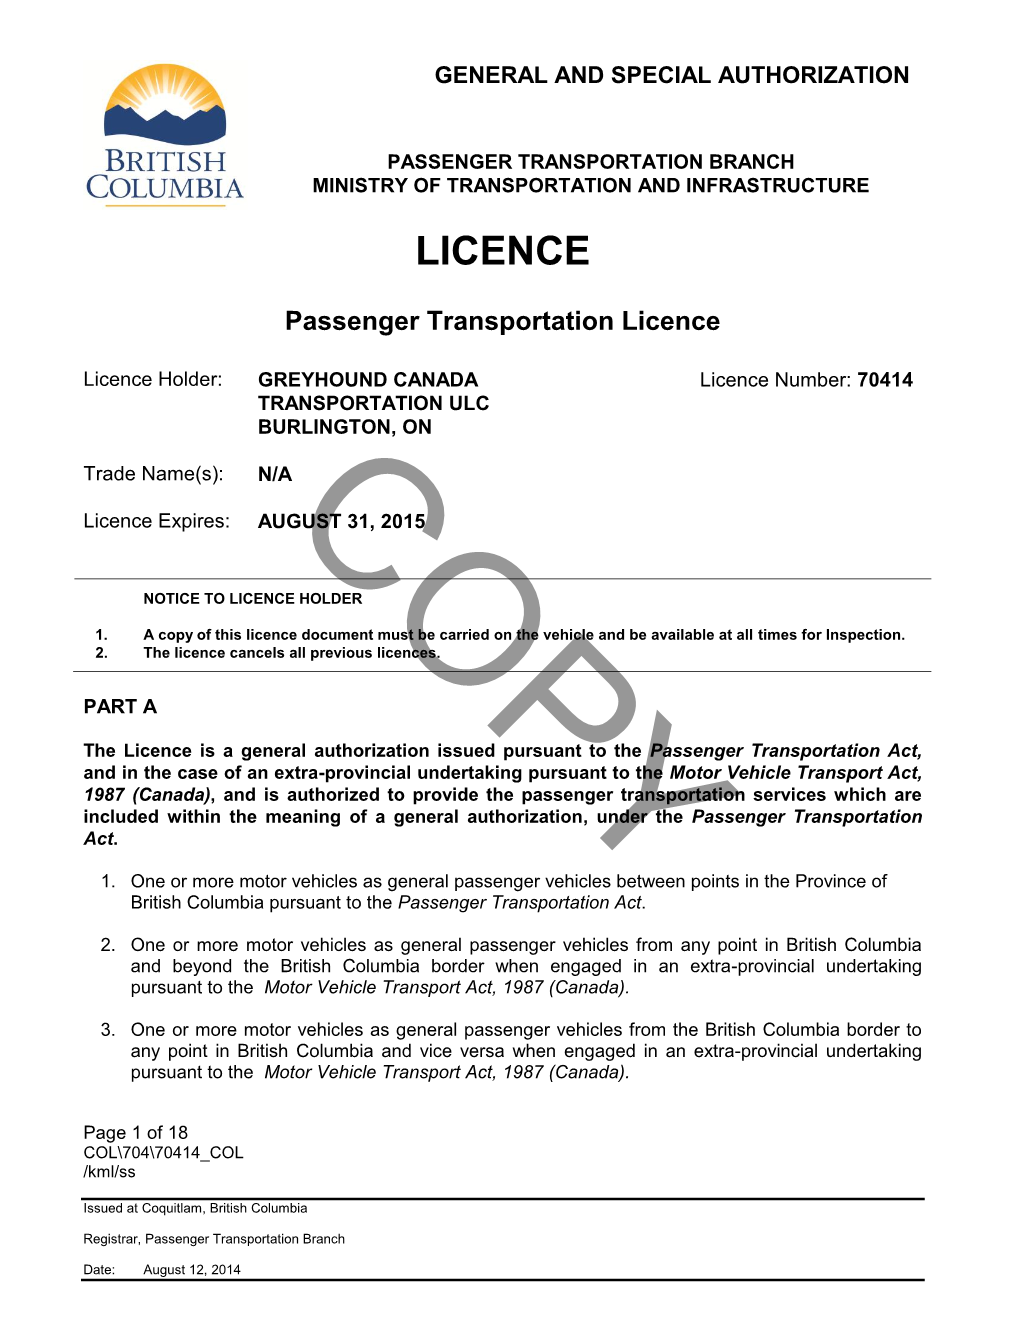 Greyhound Passenger Transportation Licence